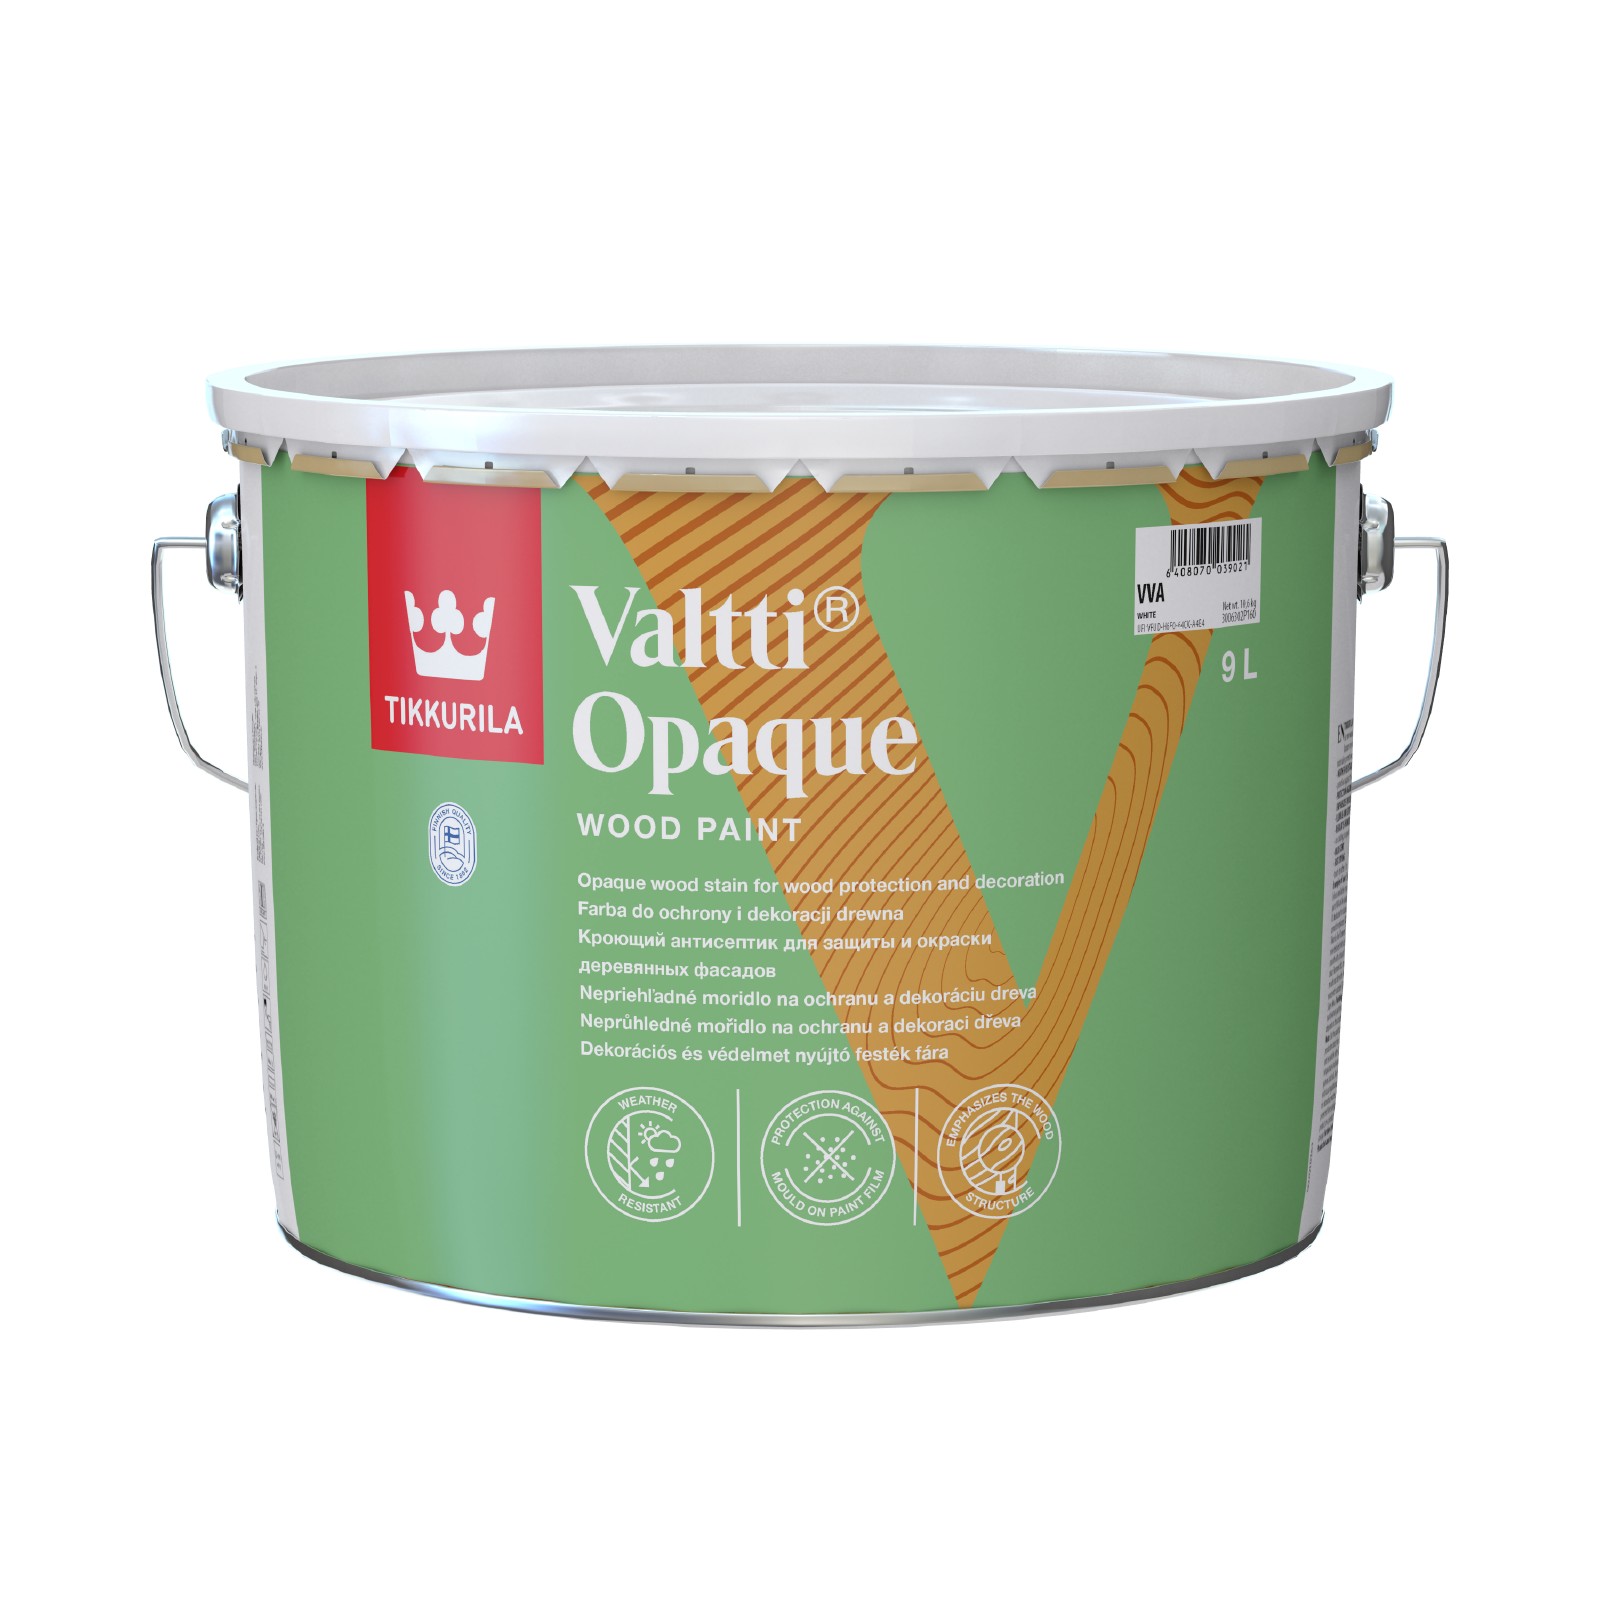 Valtti Opaque (バルッティ オパーク )